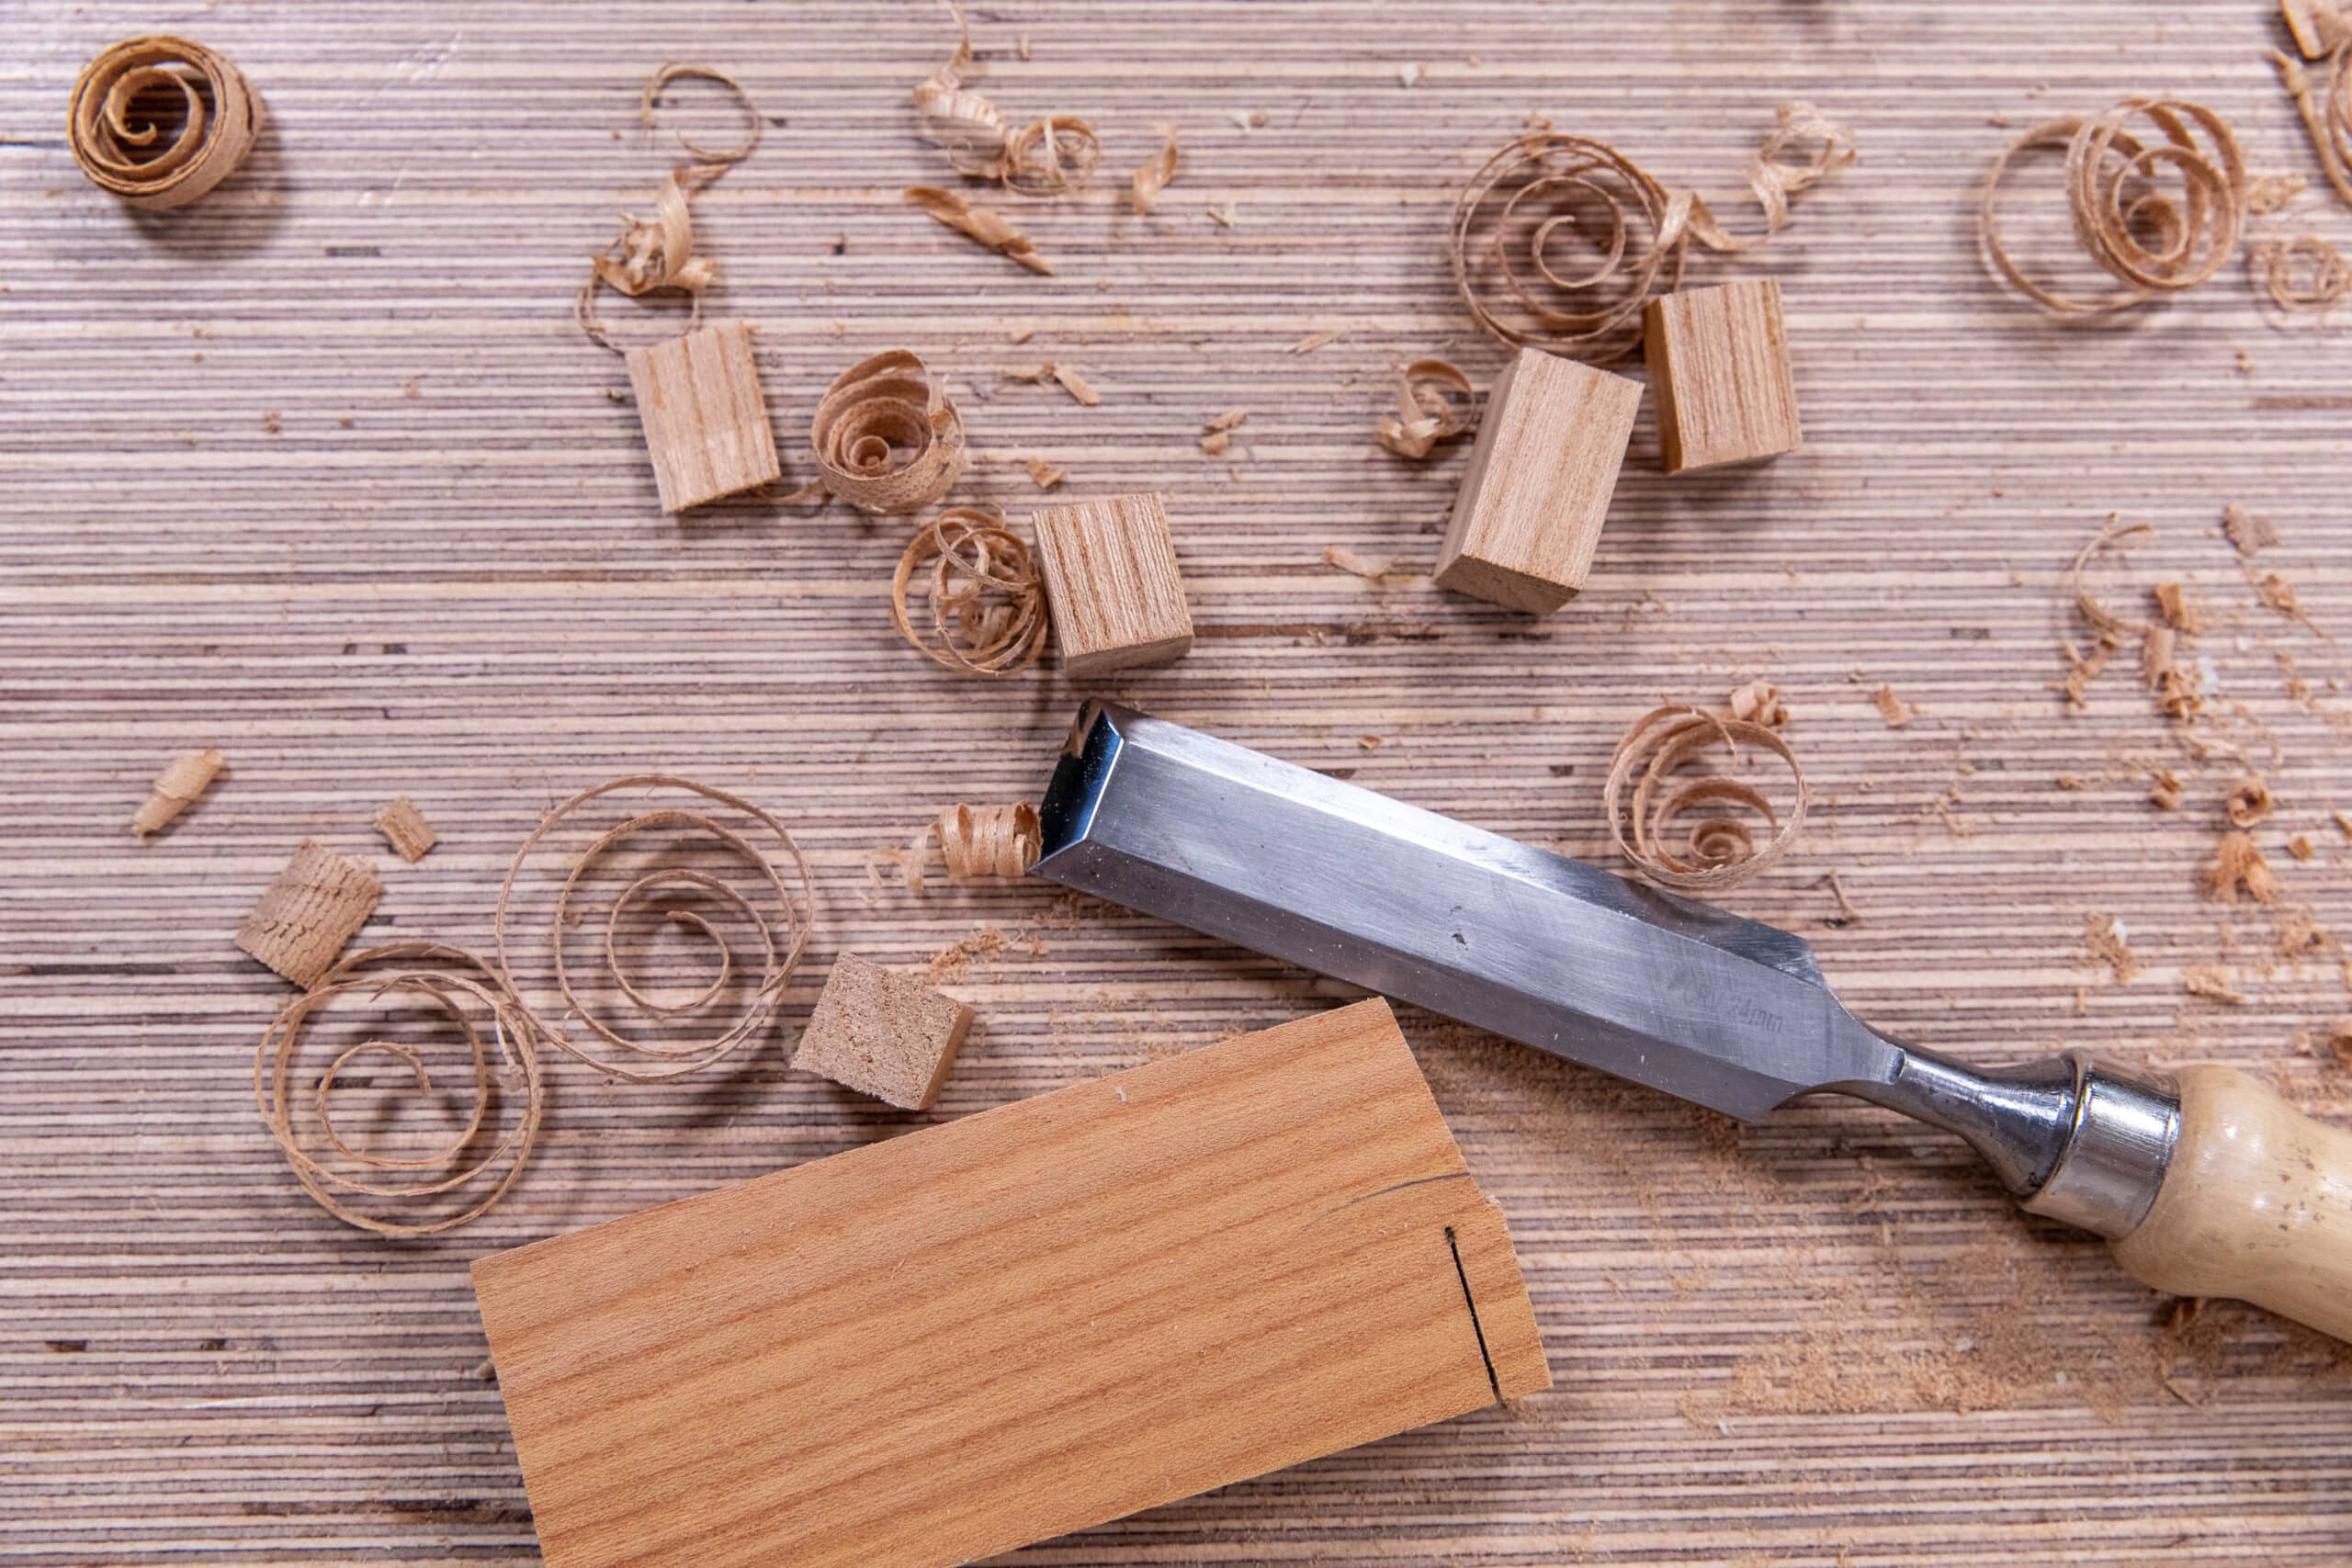 Garnishing Knife & Tool Set & Step-by-Step Book